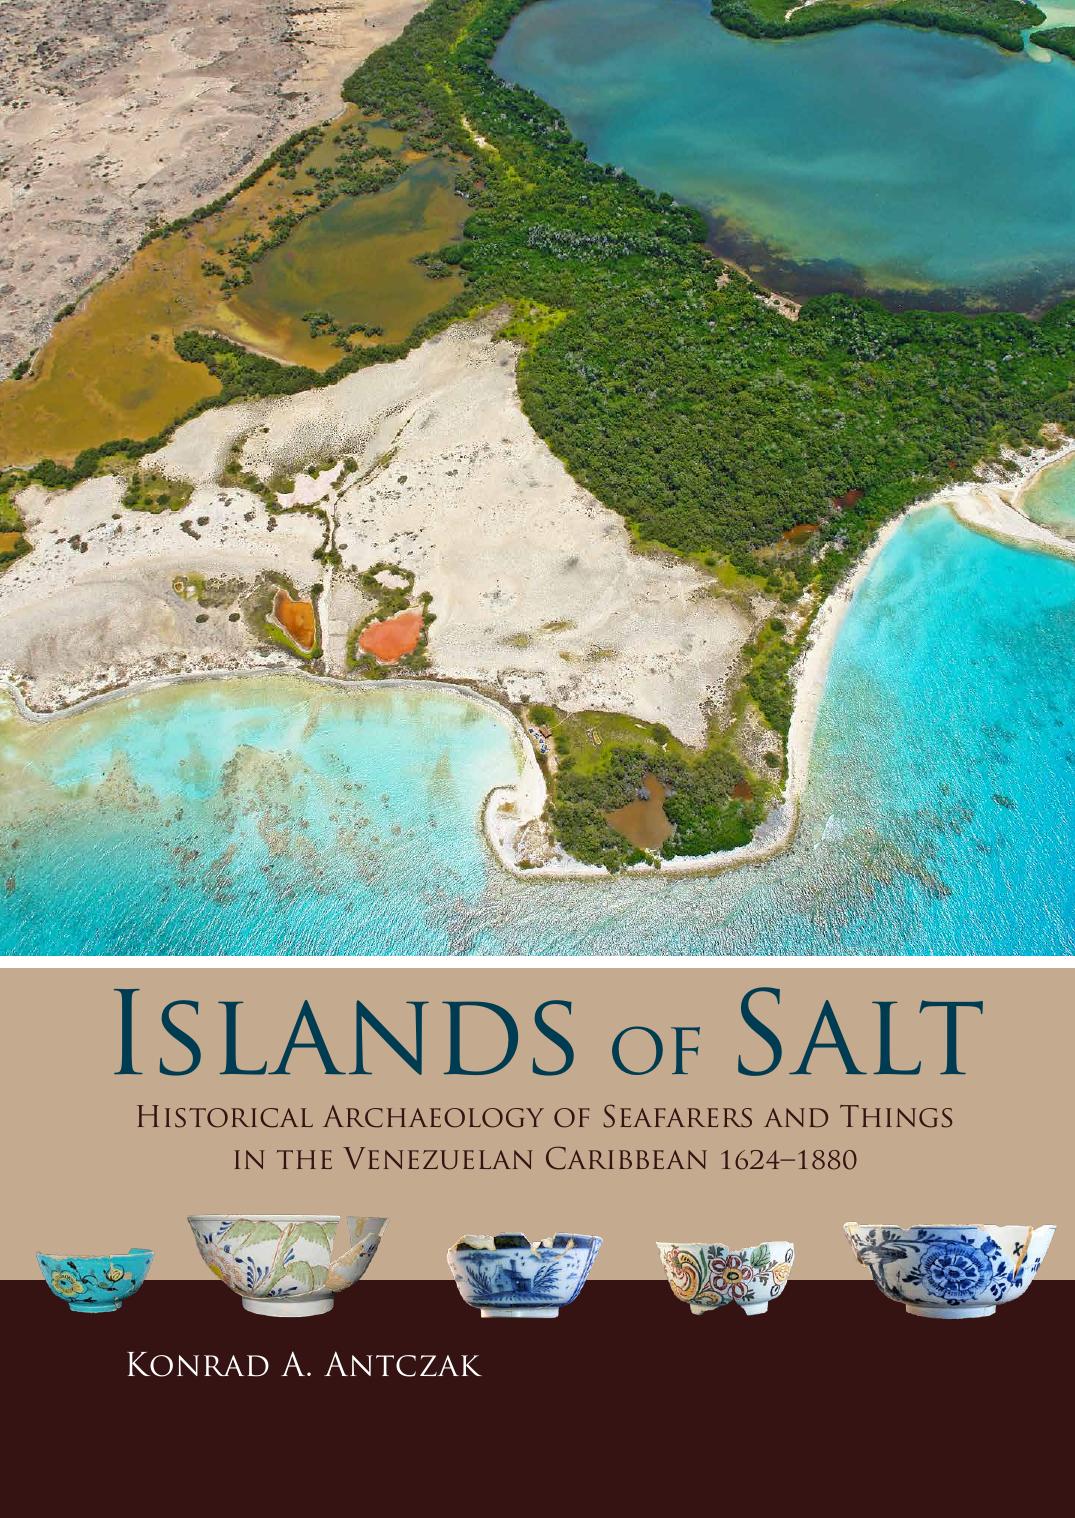 Islands of Salt: Historical Archaeology of Seafarers and Things in the Venezuelan Caribbean, 1624-1880 by Konrad A. Antczak